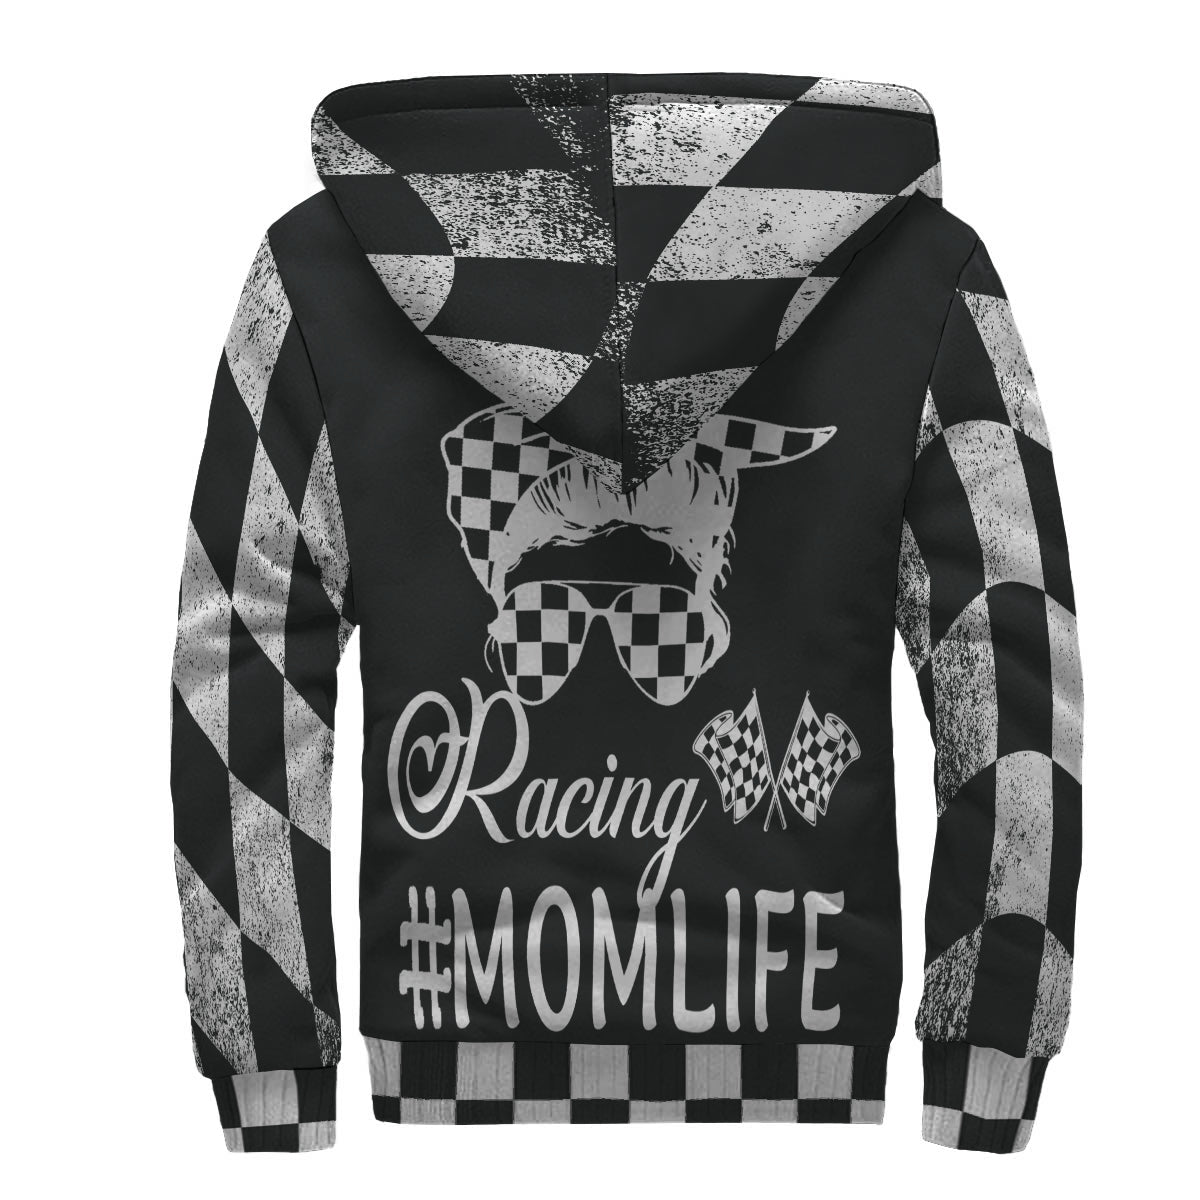 Racing mom jacket